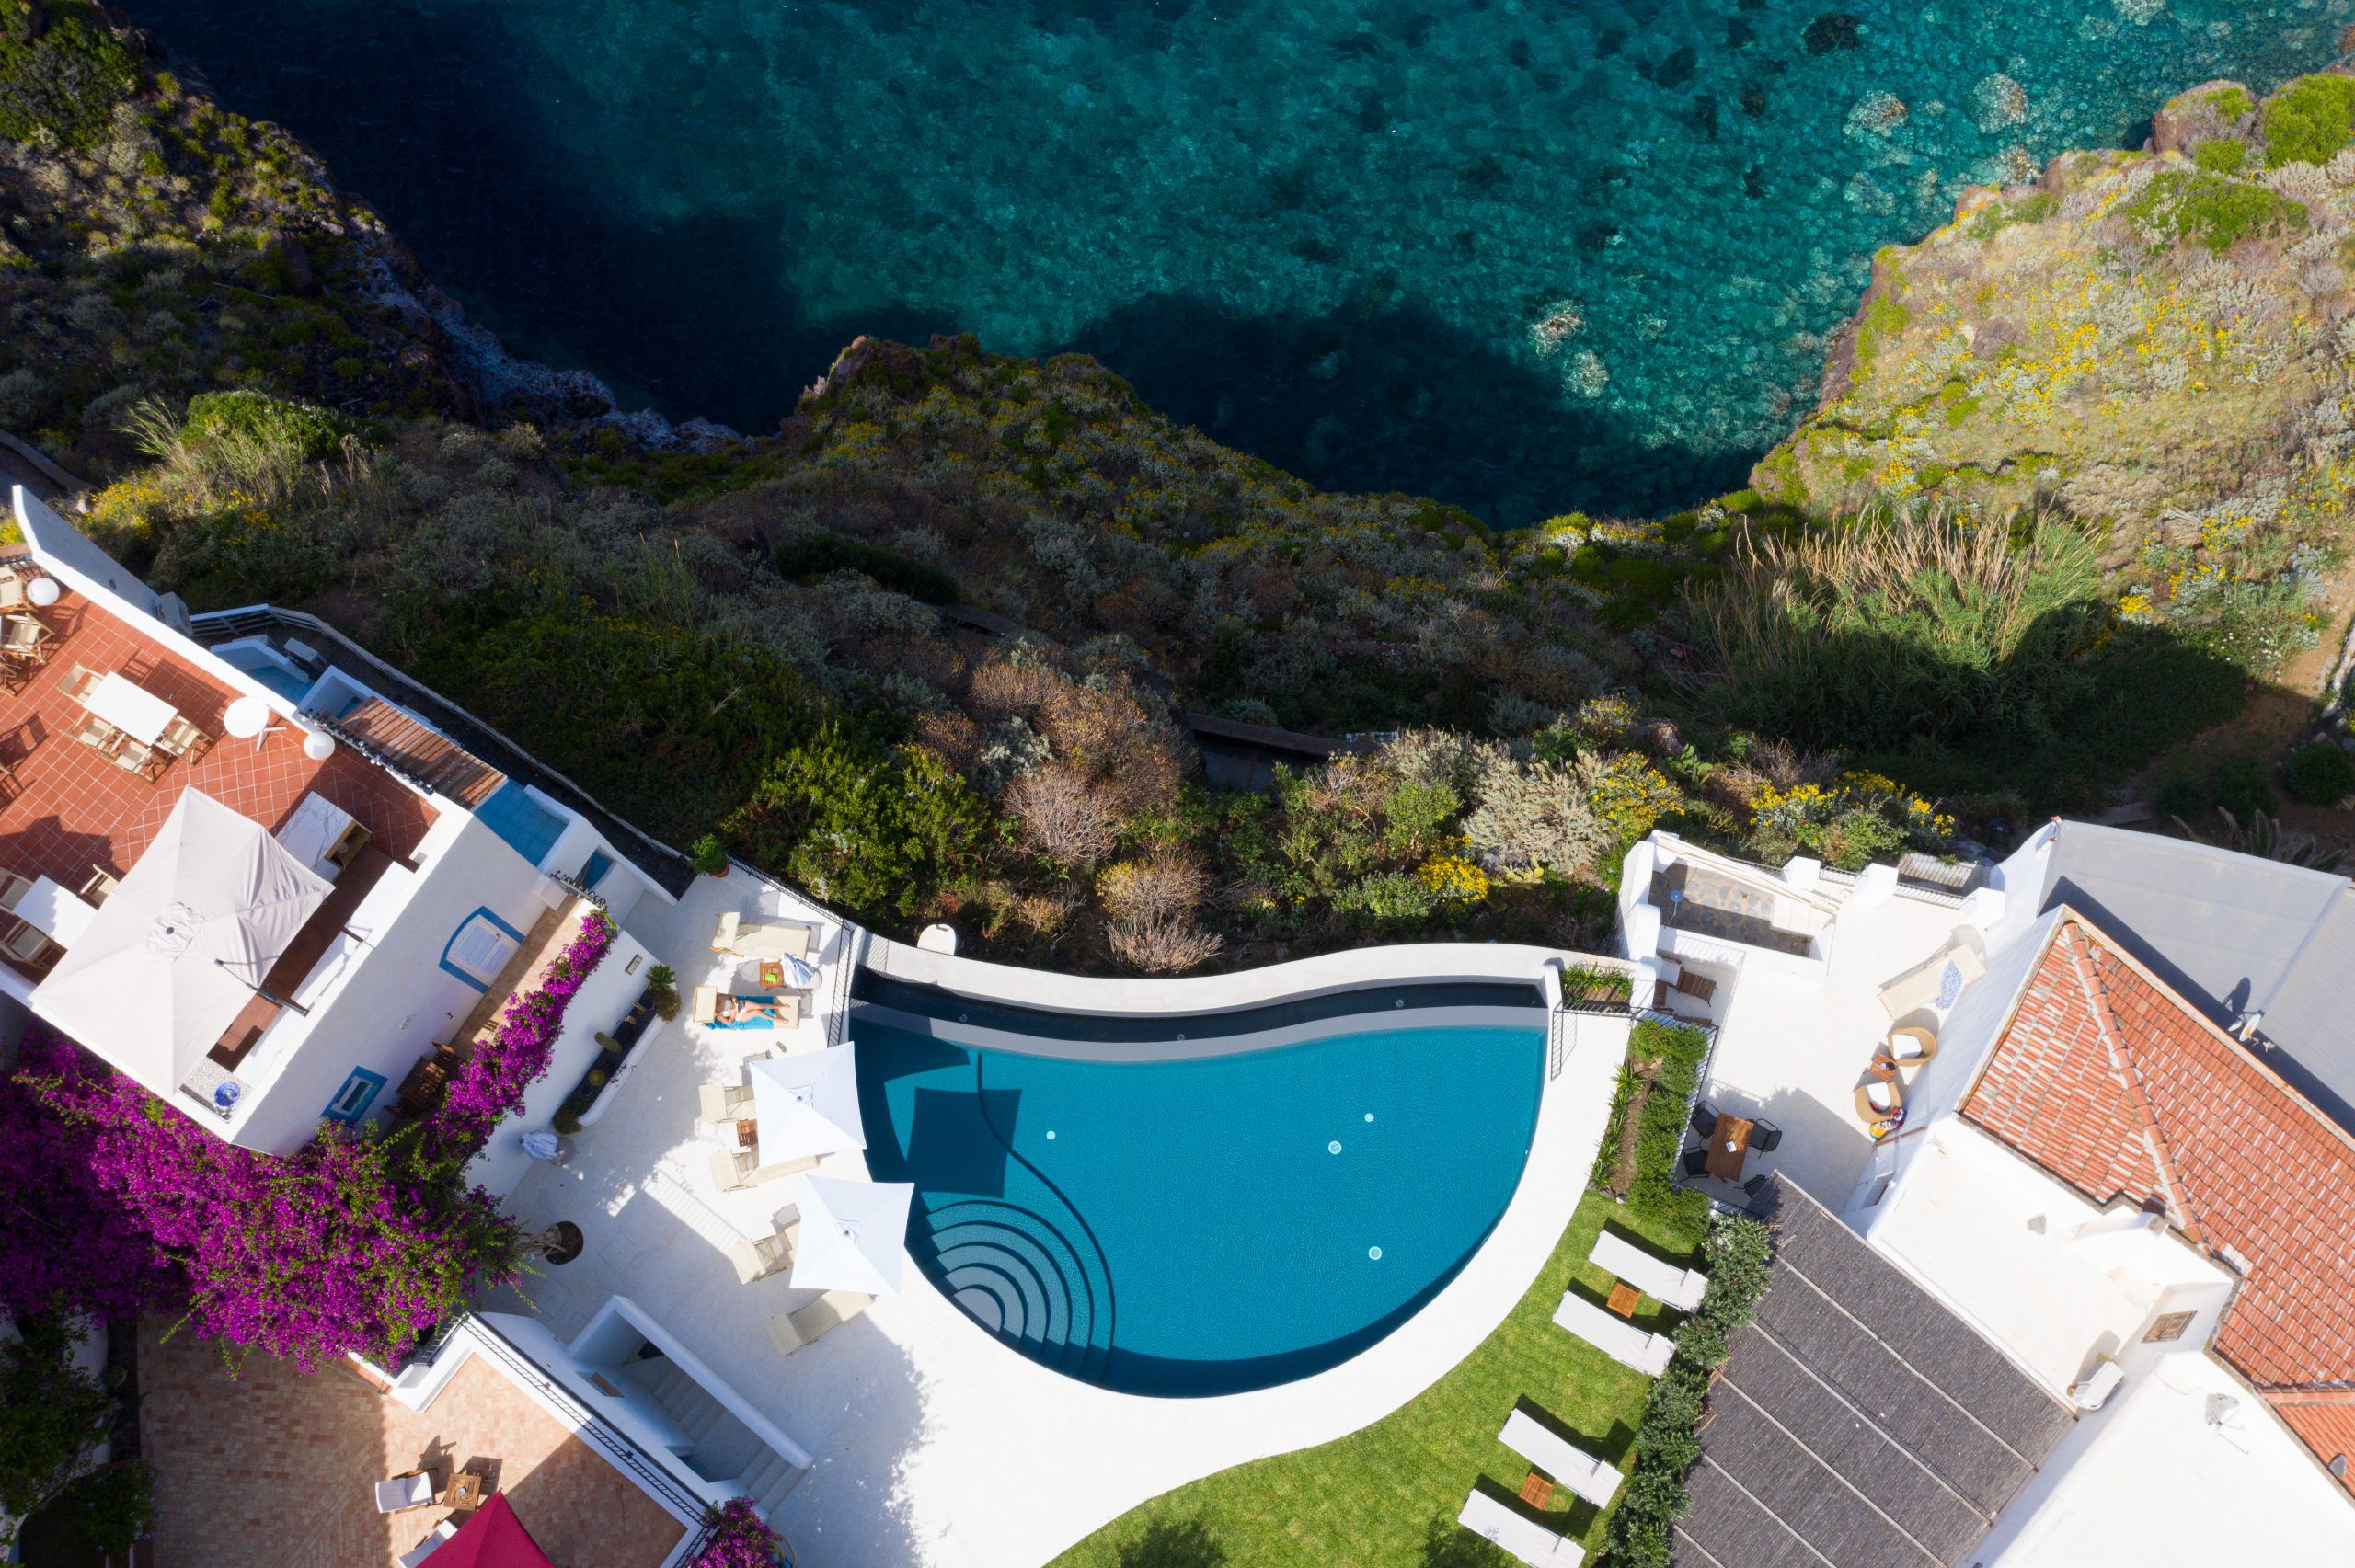 Hotel Punta Scario con piscina a sfioro